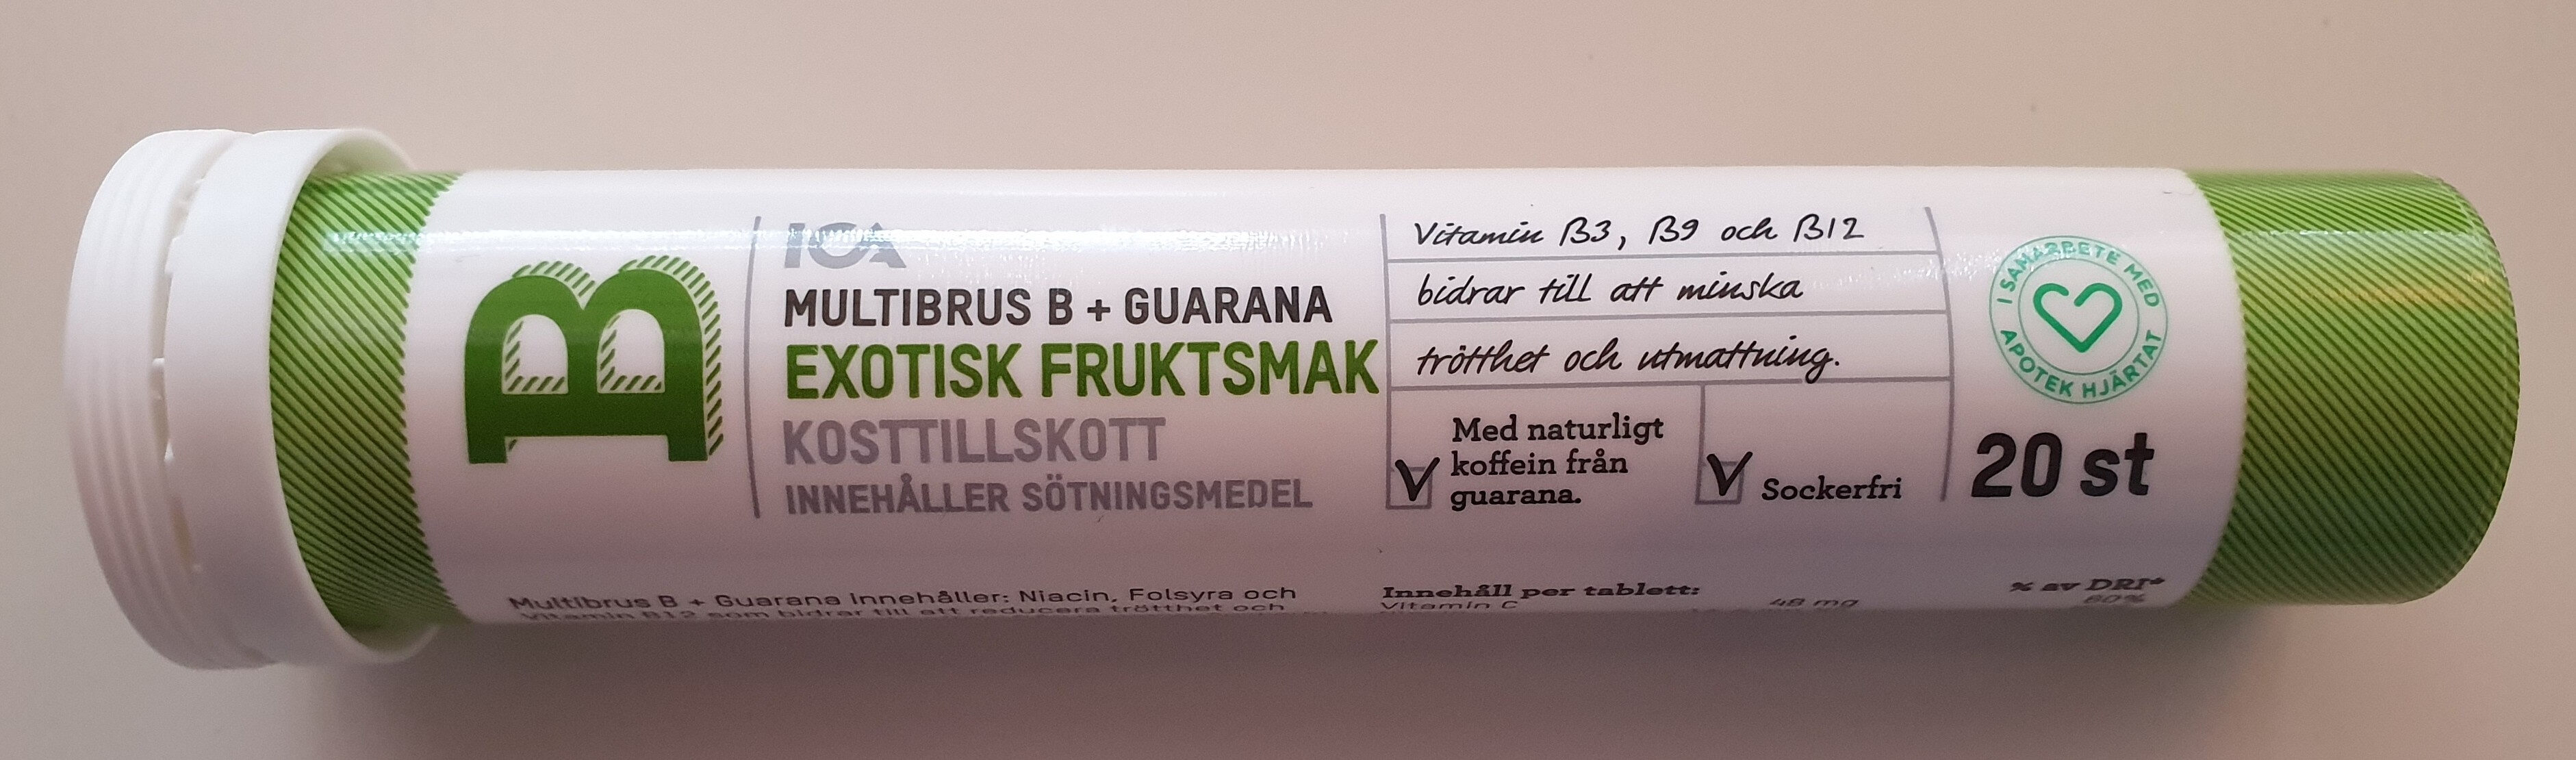 Multibrus B + Guarana Exotisk Fruktsmaj - Produkt - sv